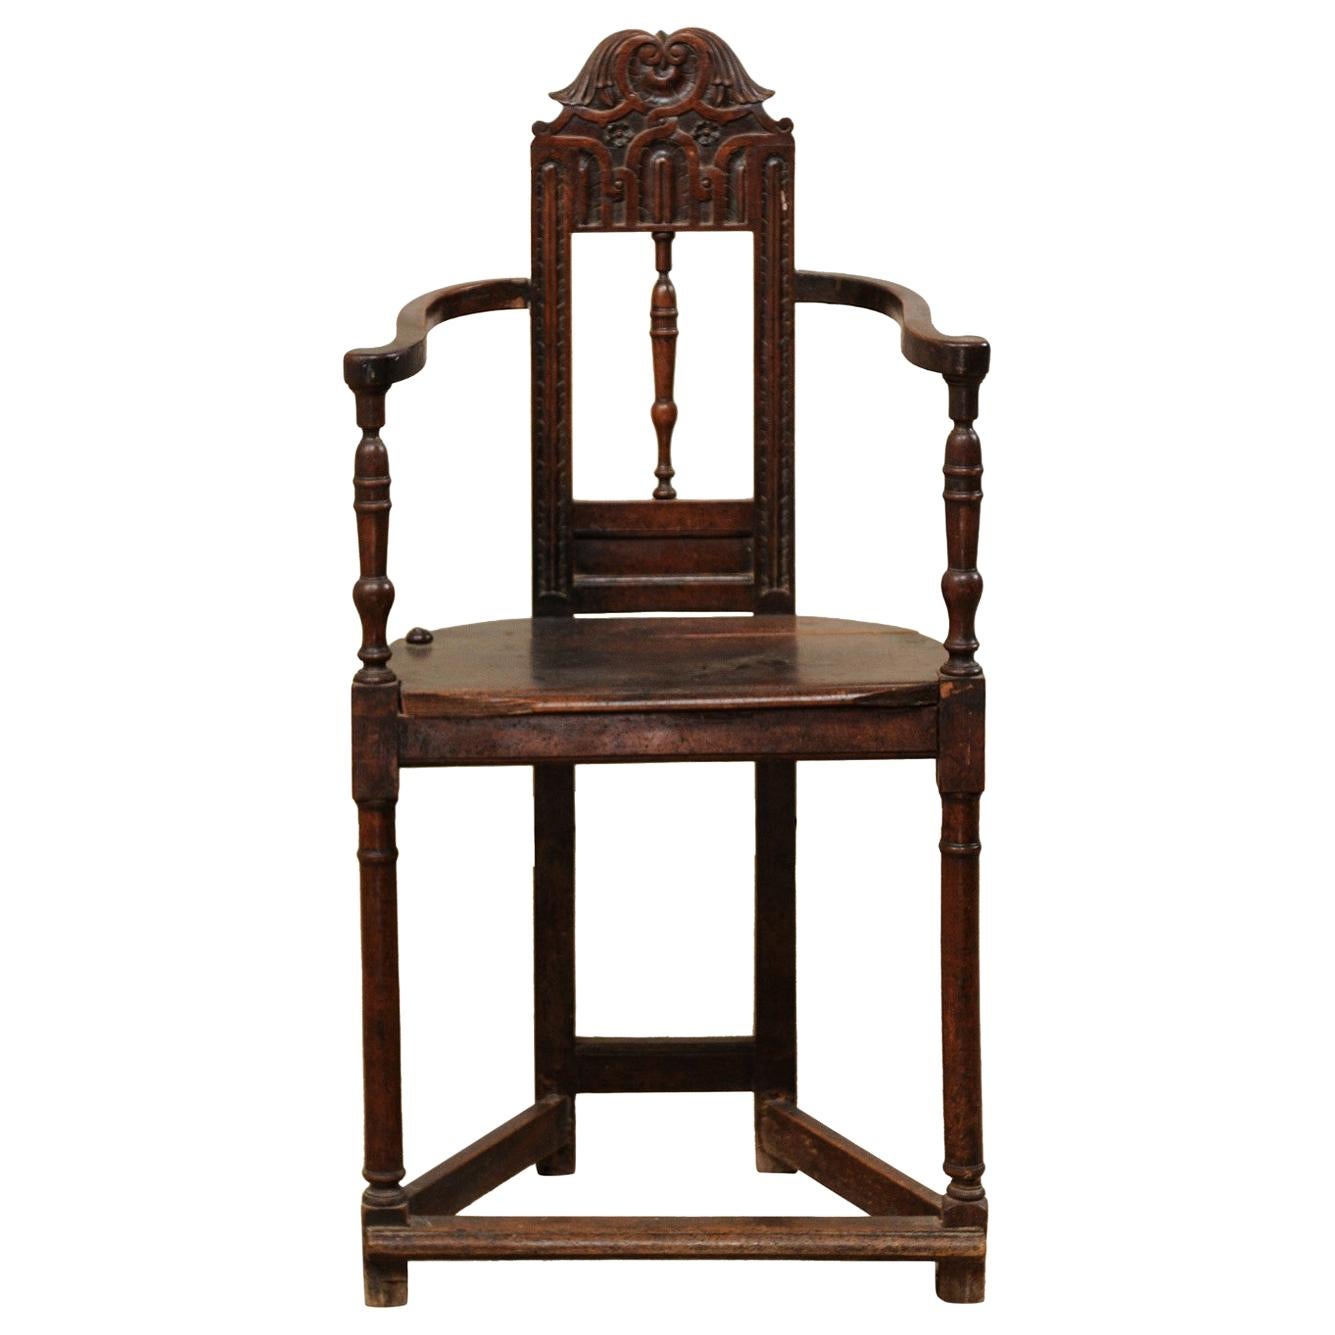 17th Century Spanish Carved Wood Armchair, Rectangular-Shape for a Room Corner